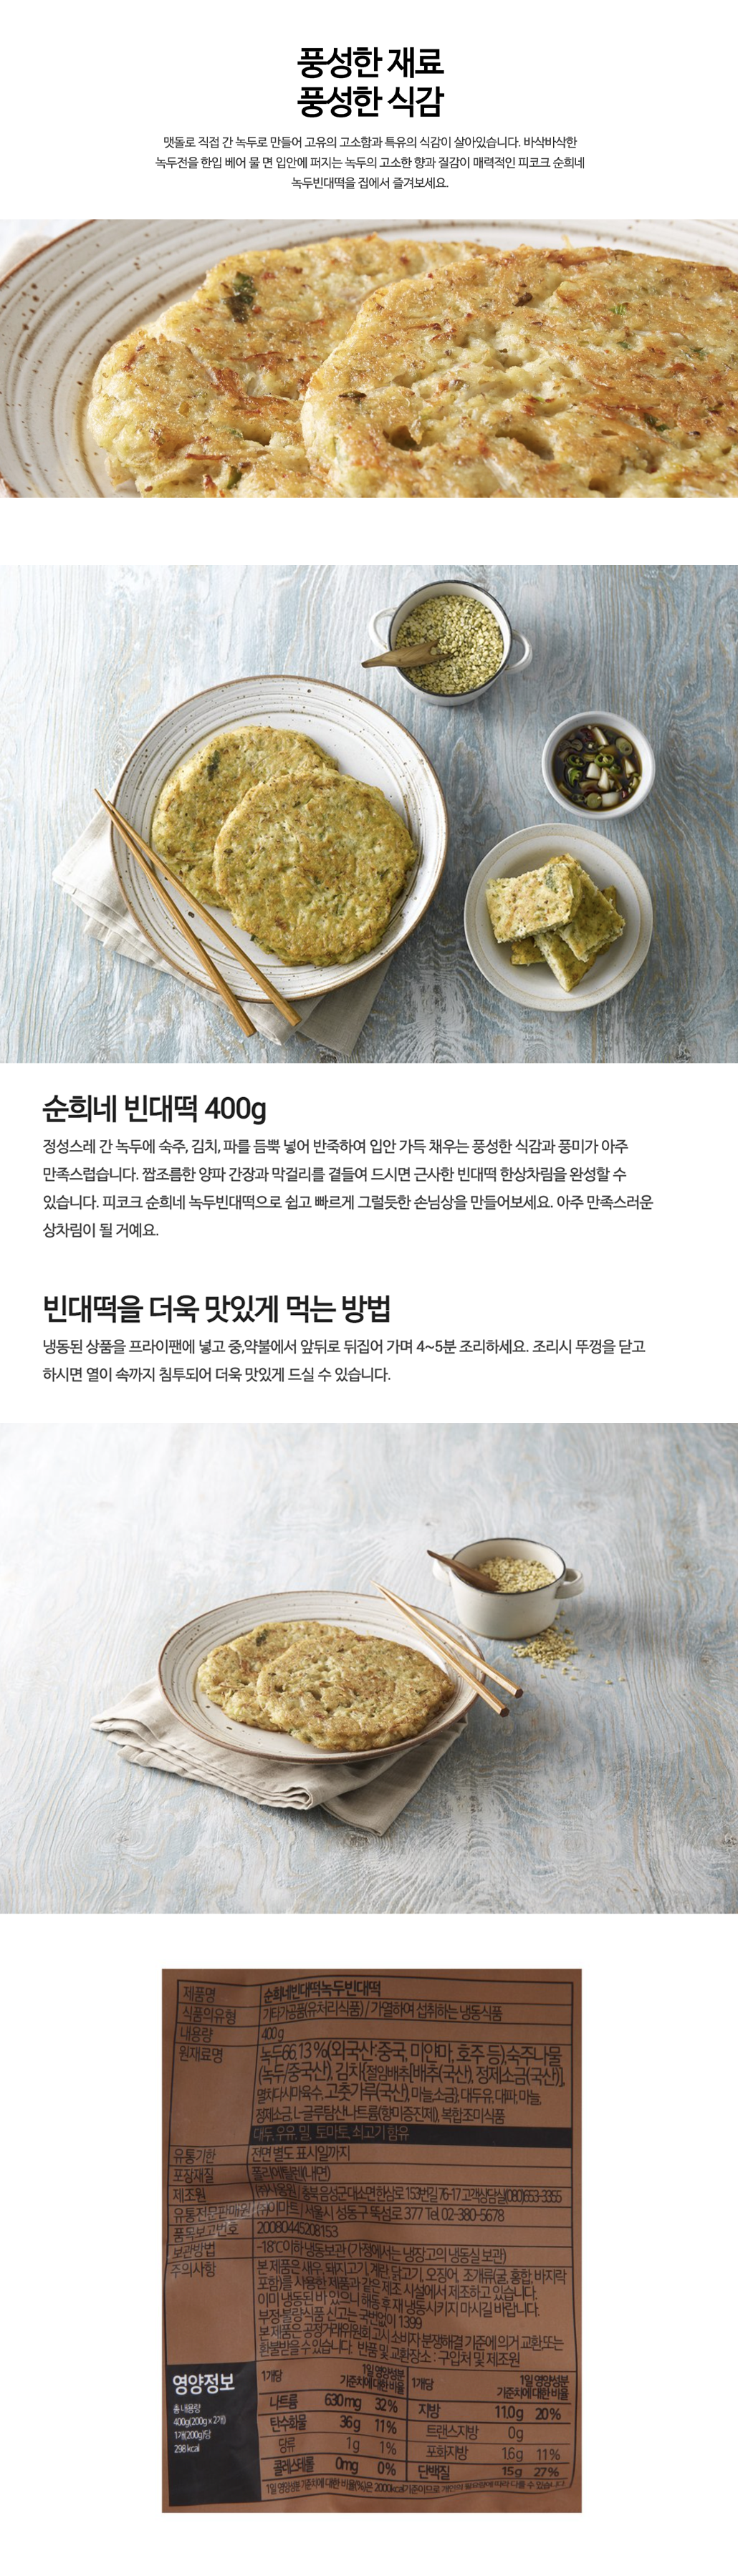 韓國食品-[Peacock] Soon Hee's Mung Bean Pancake (Bindaetteok) 400g